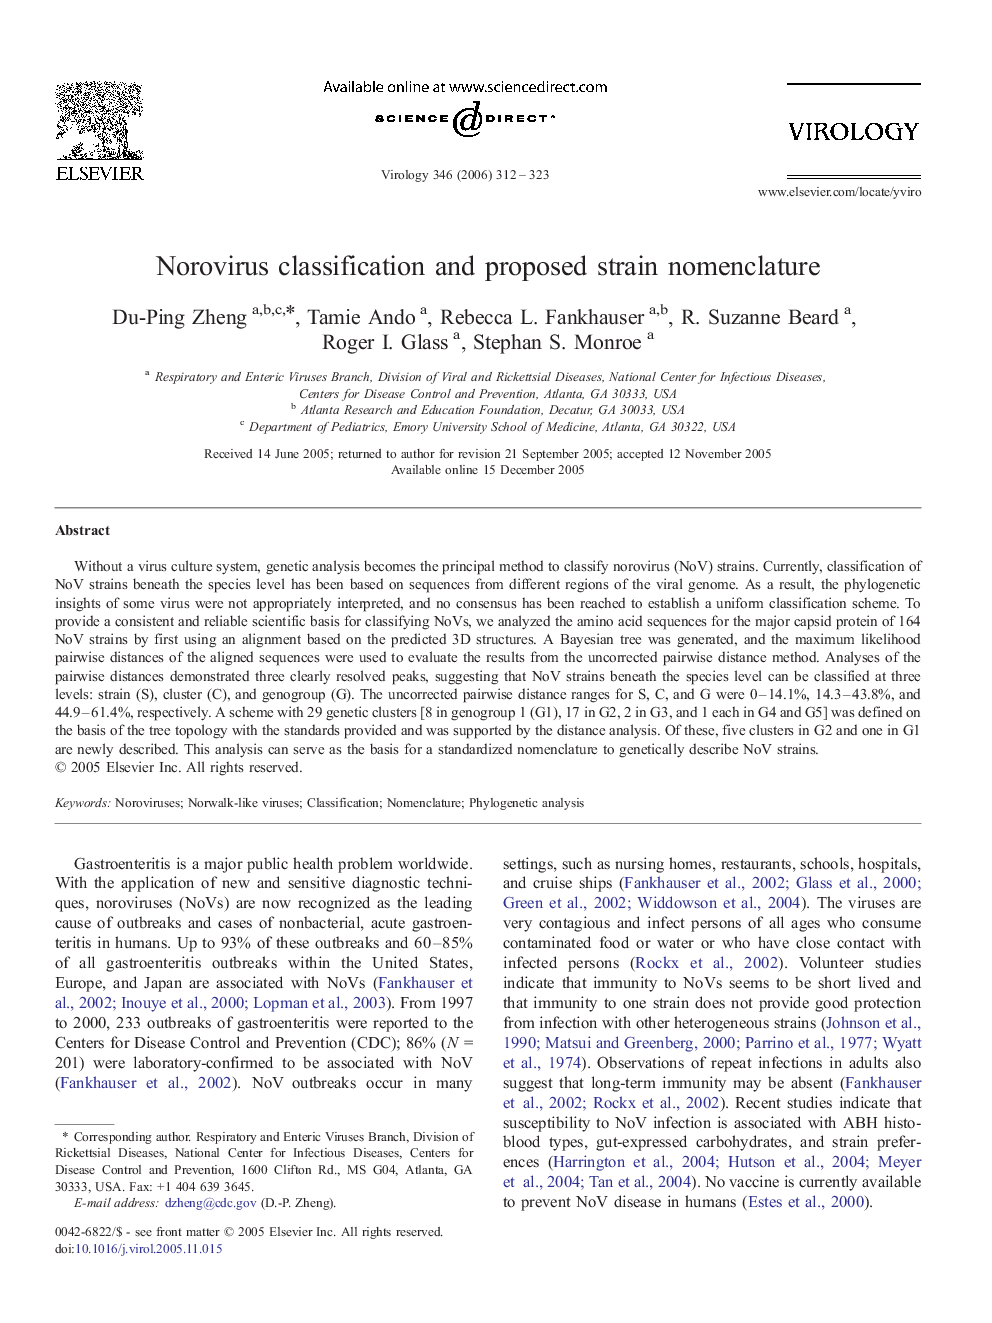 Norovirus classification and proposed strain nomenclature